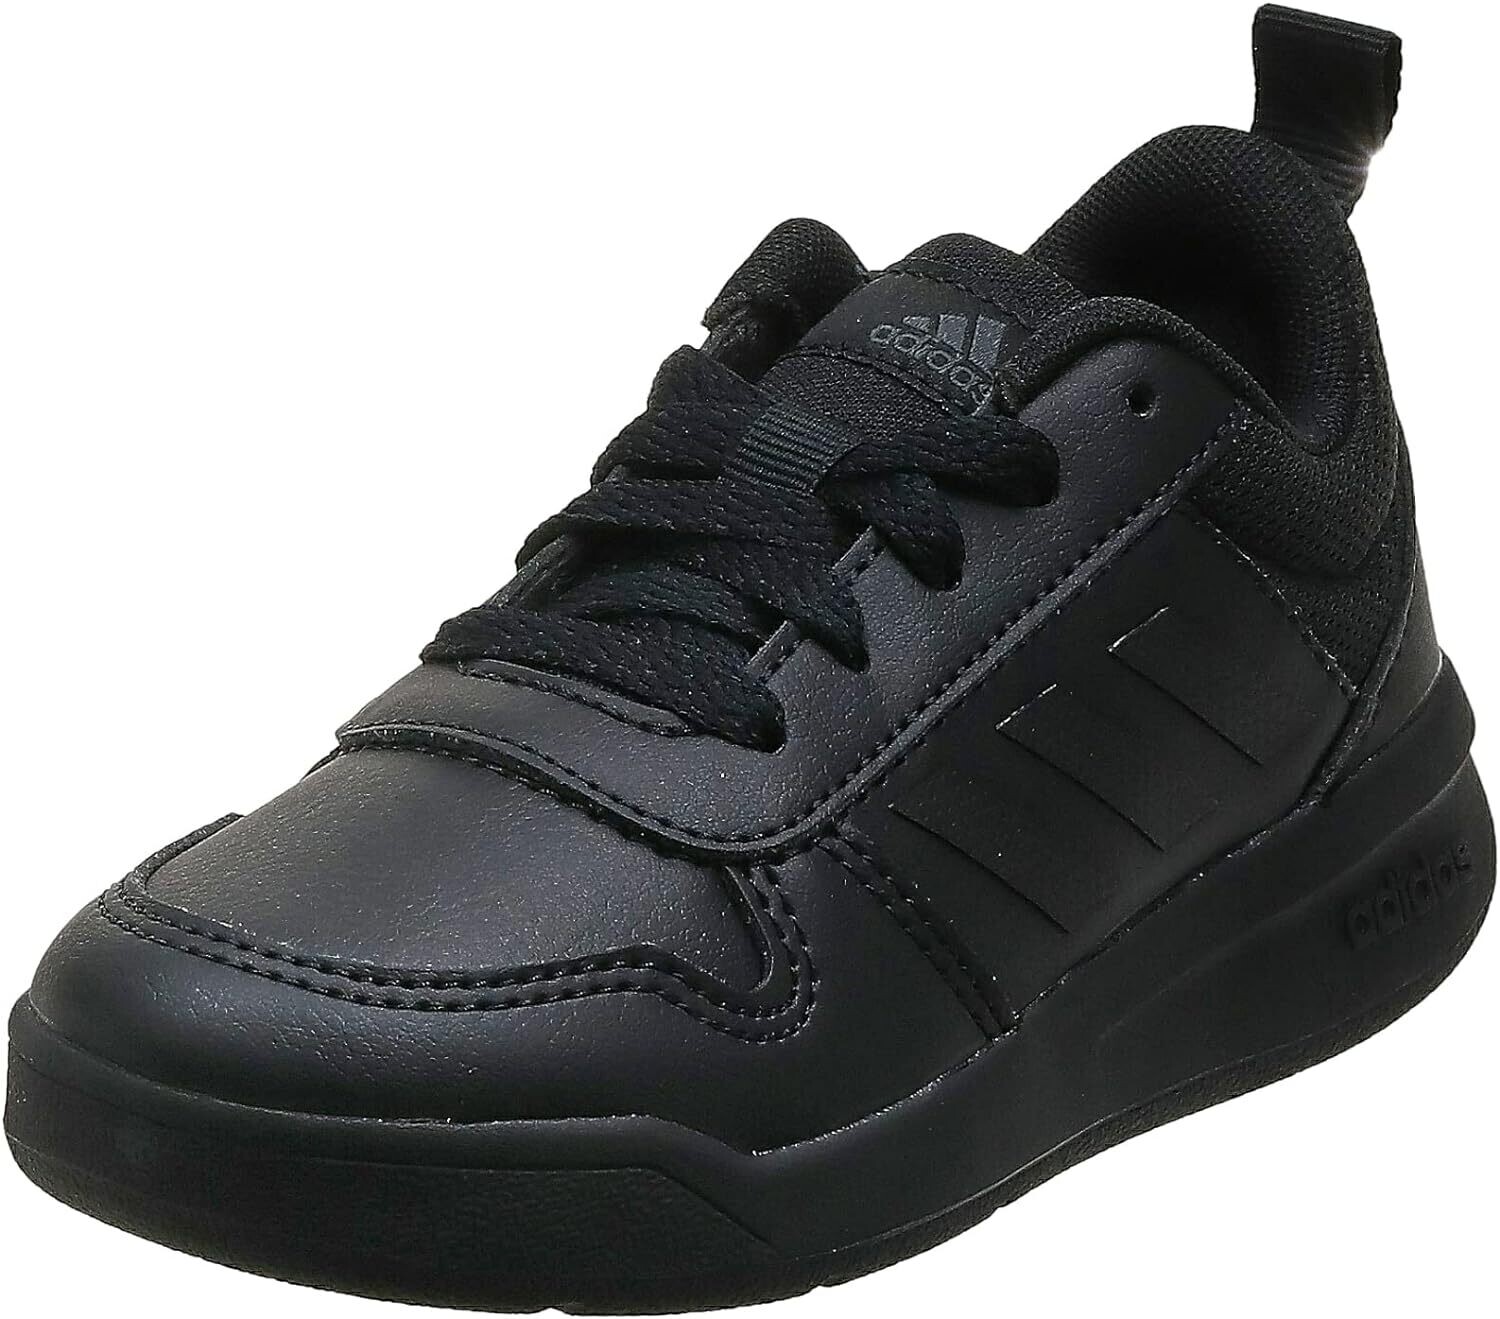 Adidas Children Running Shoes Tensaur K - Black (Sizes 1-13)